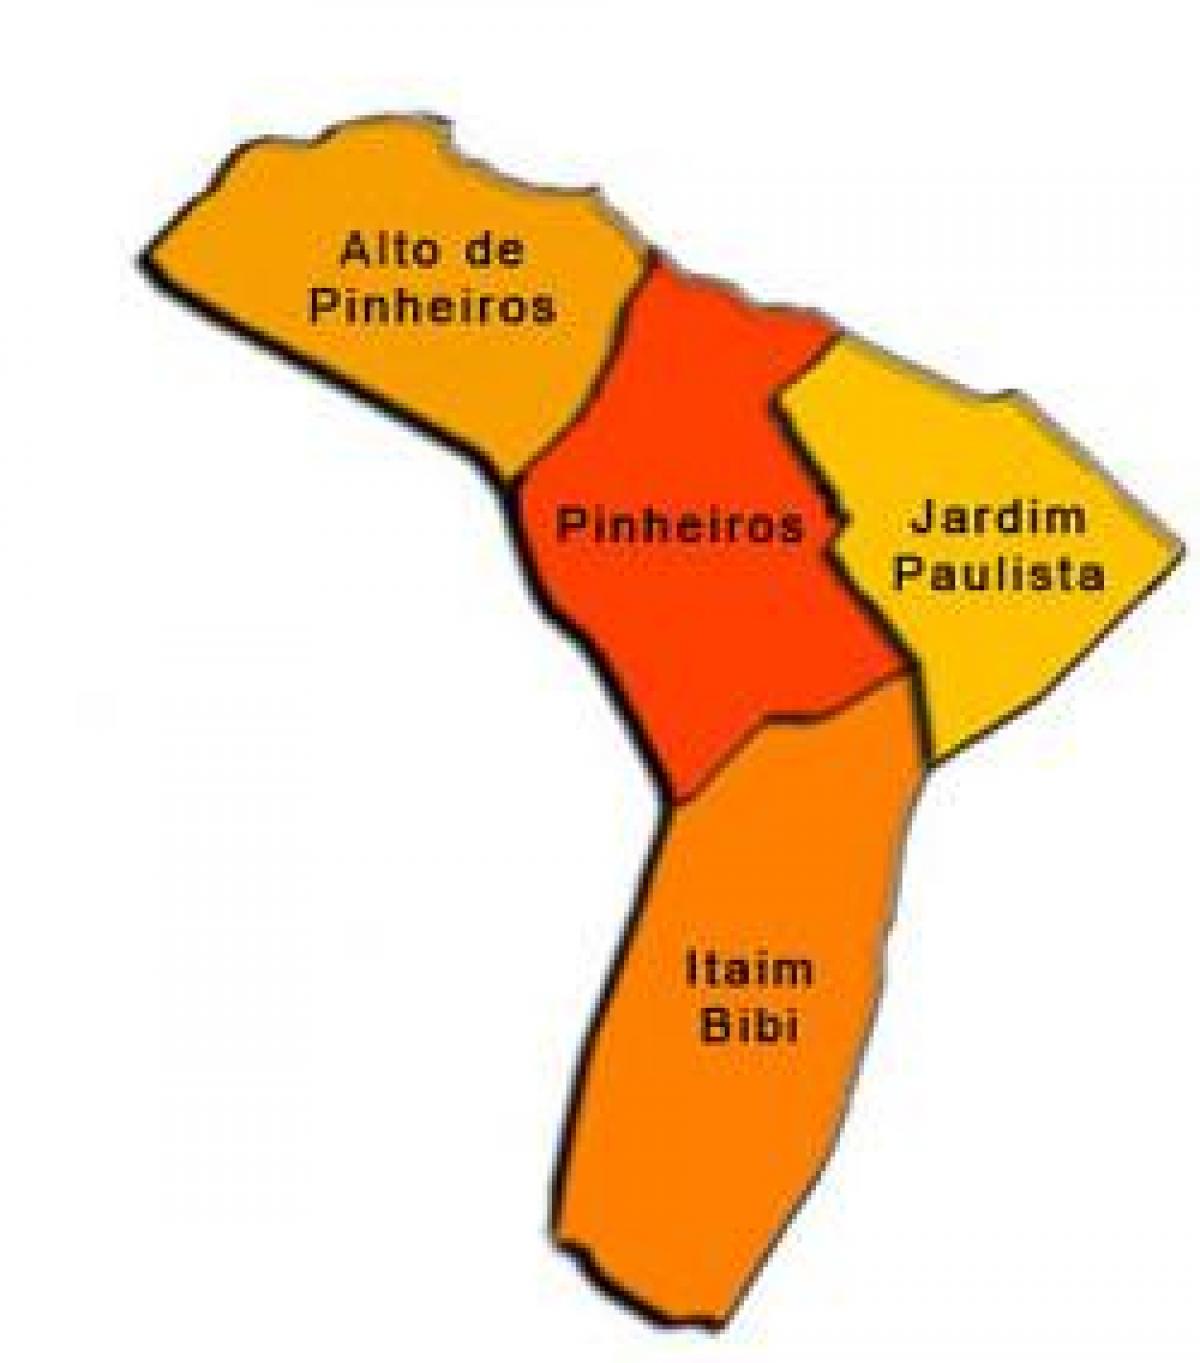 Mapa Pinheiros sub-prefektúra